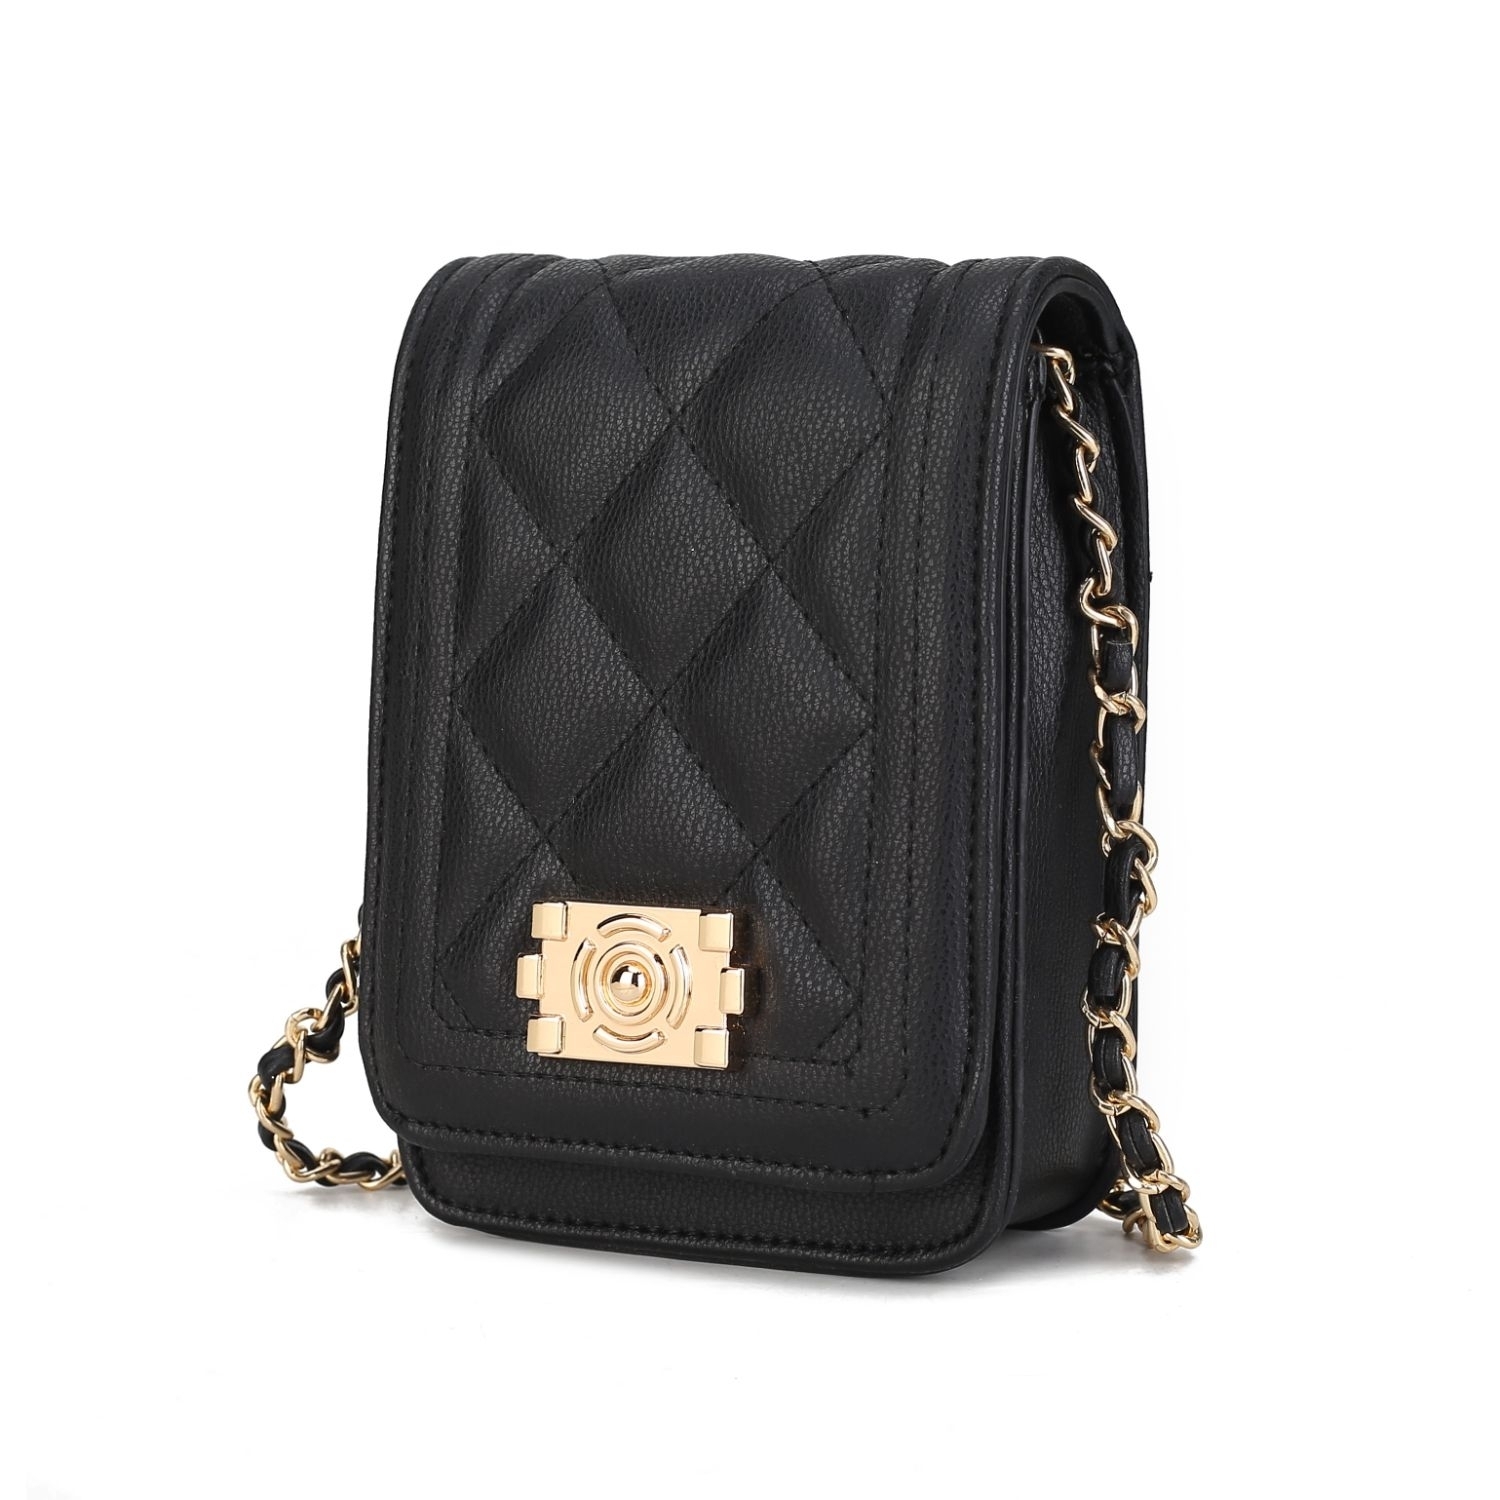 MKF Collection Gemma Crossbody Handbag By Mia K - Teal